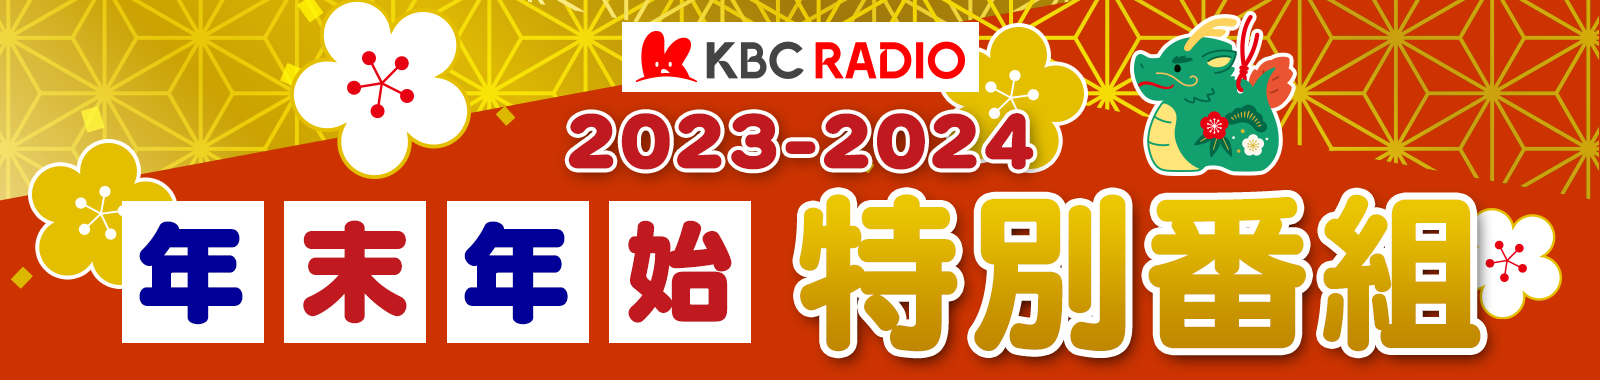 KBCラジオ 2023-2024 年末年始特別番組